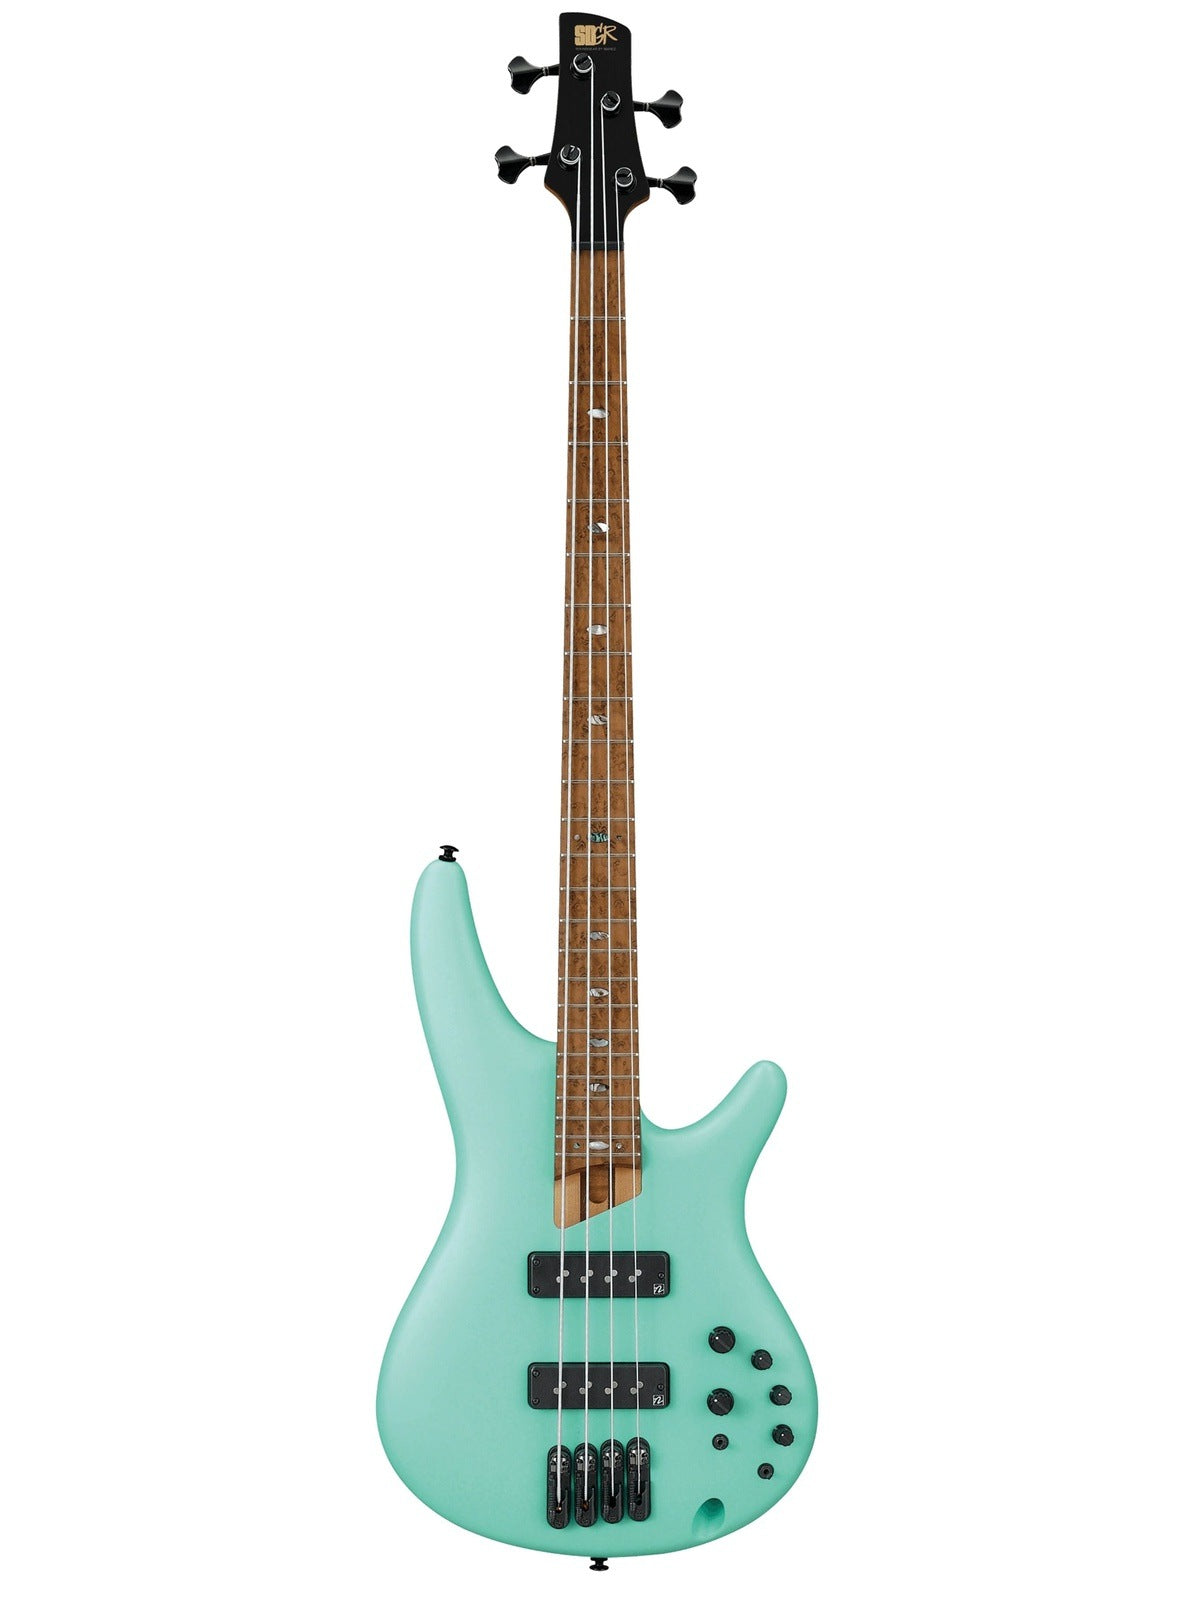 Ibanez SR1100B Electric Bass, Sea Foam Green Matte Demo Model, discontinued